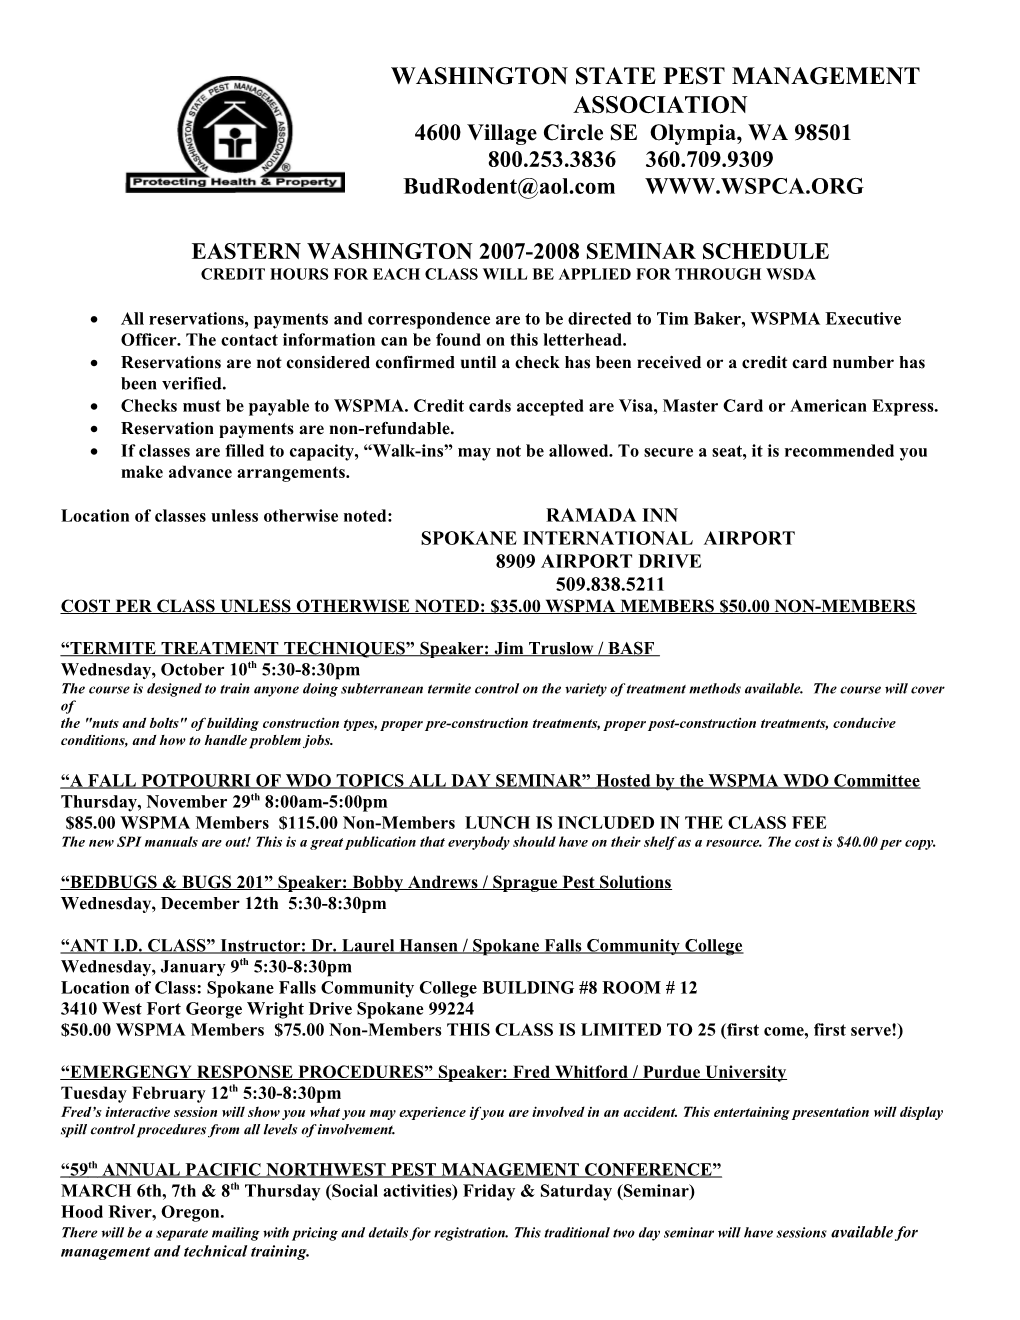 Eastern Washington 2007-2008 Seminar Schedule